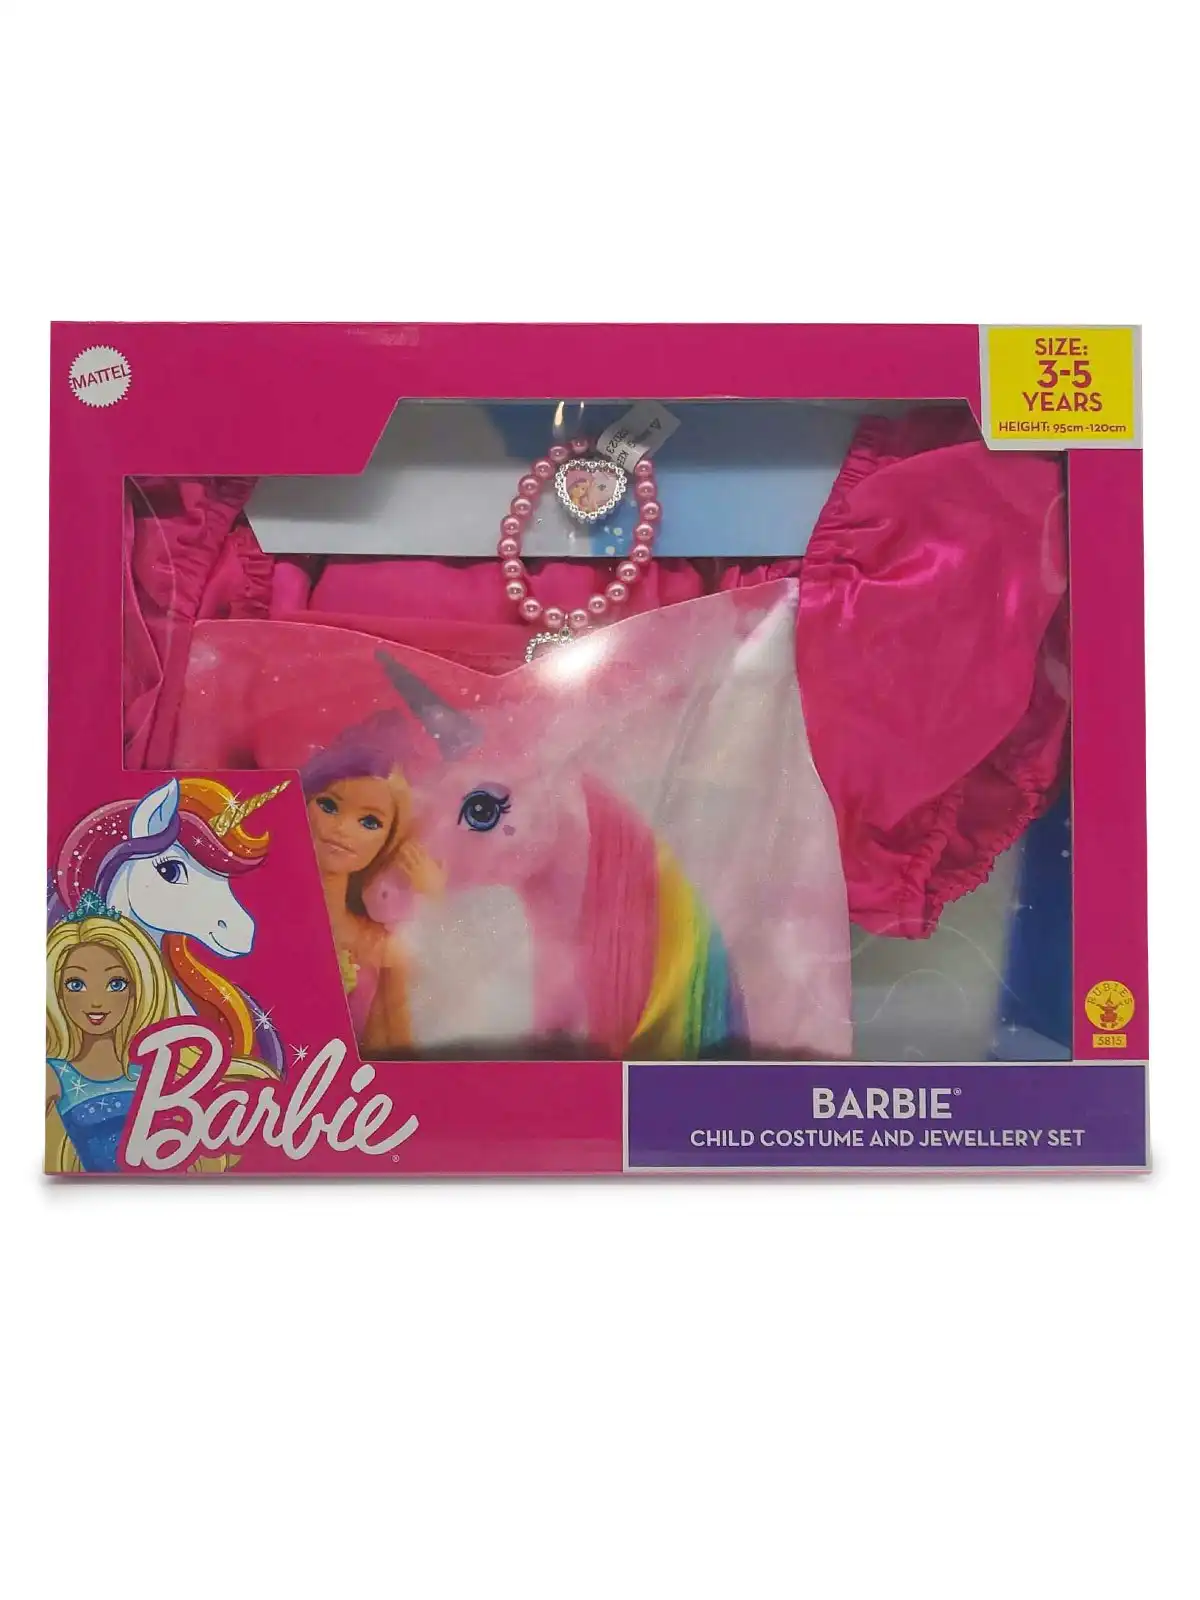 Barbie Costume Box Set 3-5yrs. old